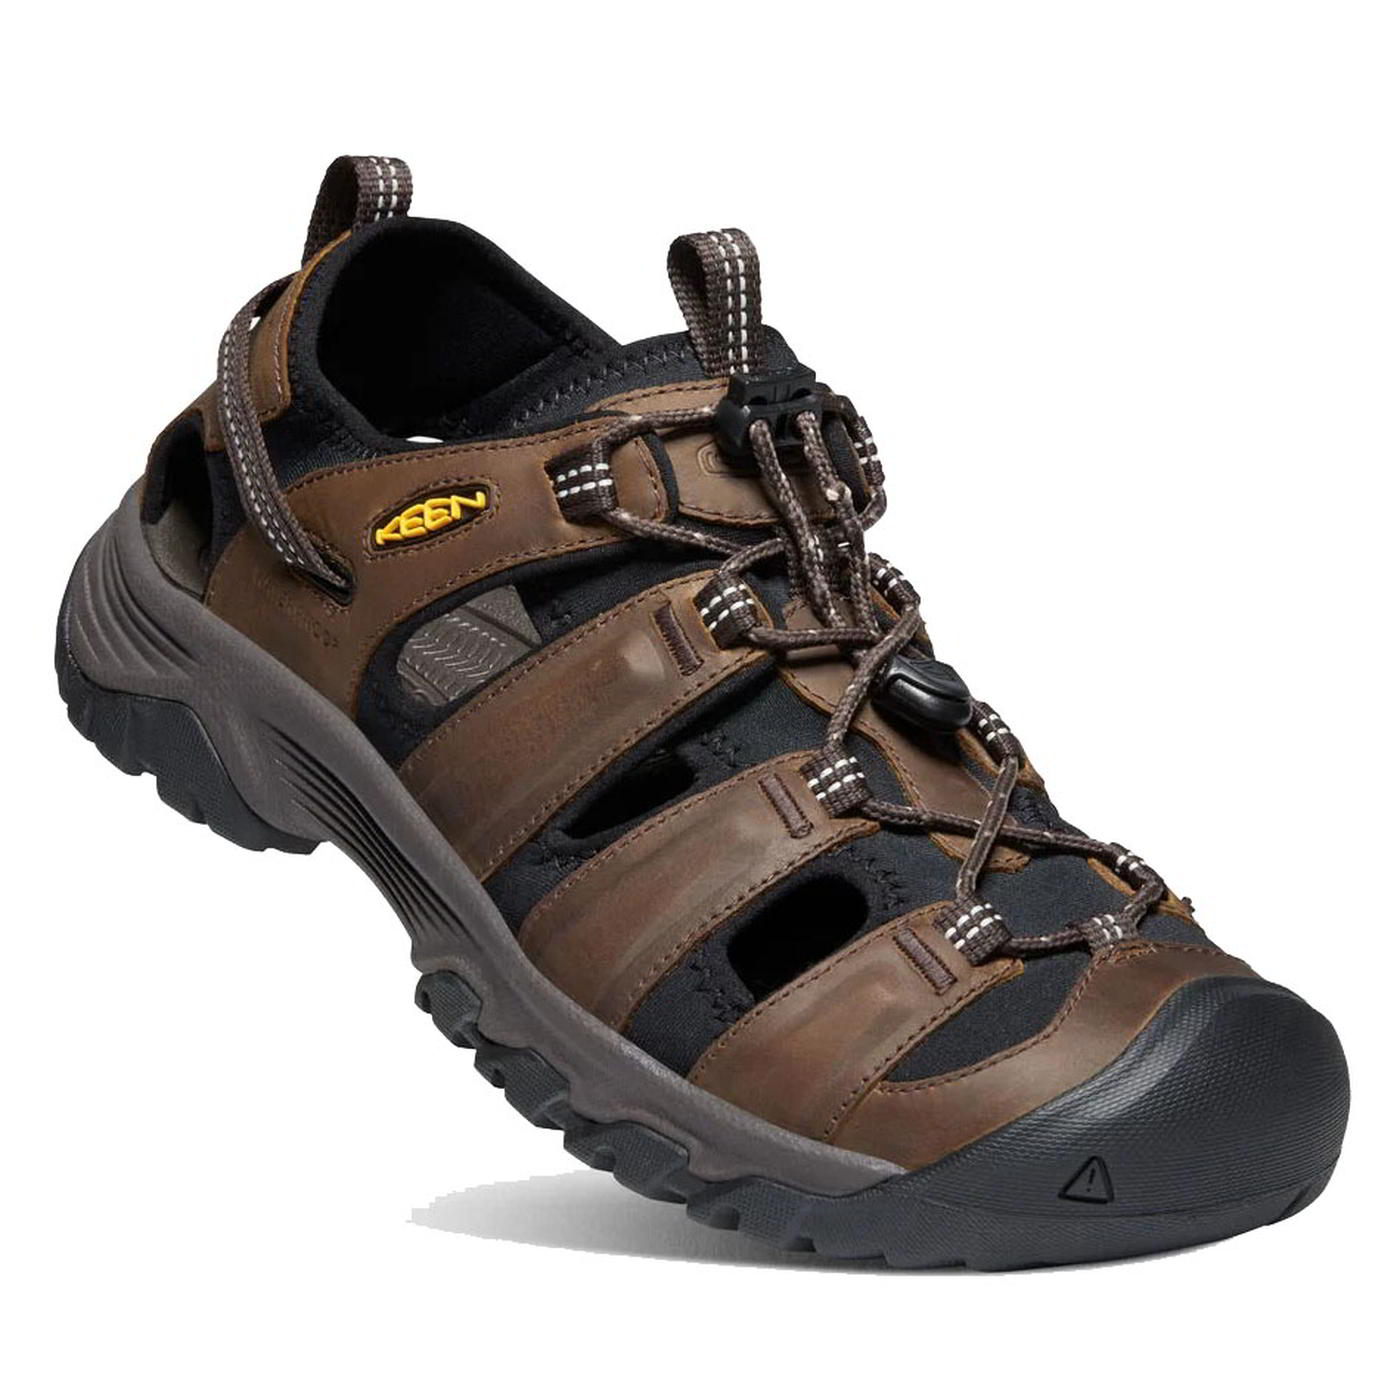 Keen Men's Targhee III Sandal Walking Hiking Shoes - UK 8 / US 9